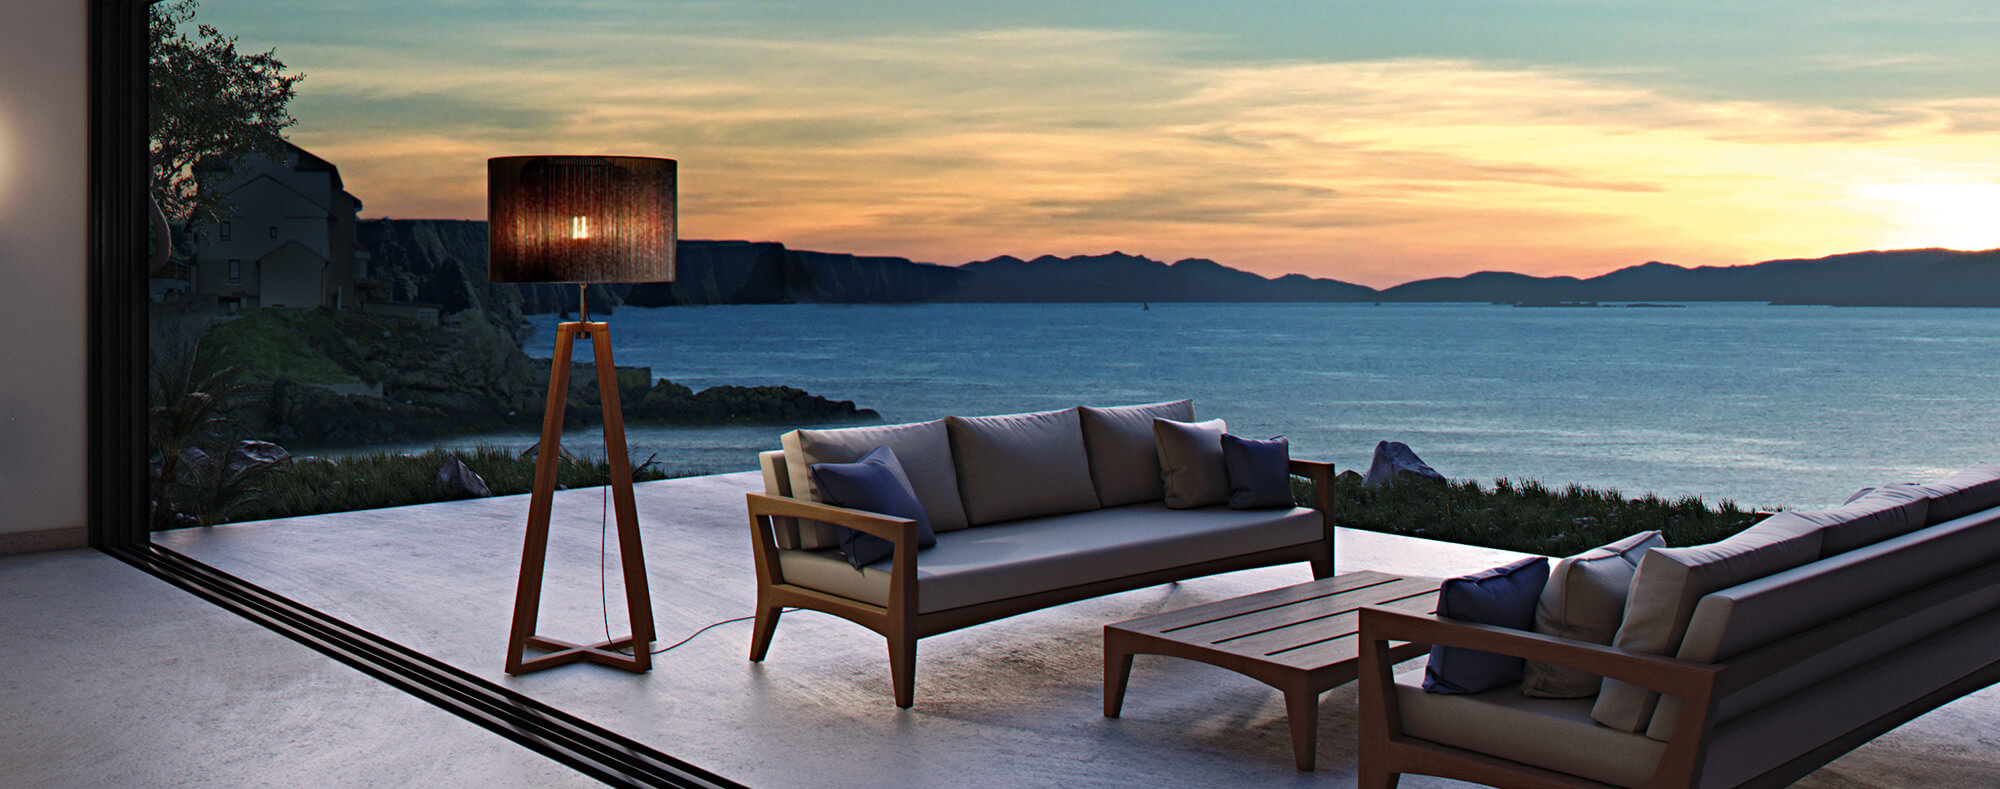 Luxury outdoor sofa set by the ocean